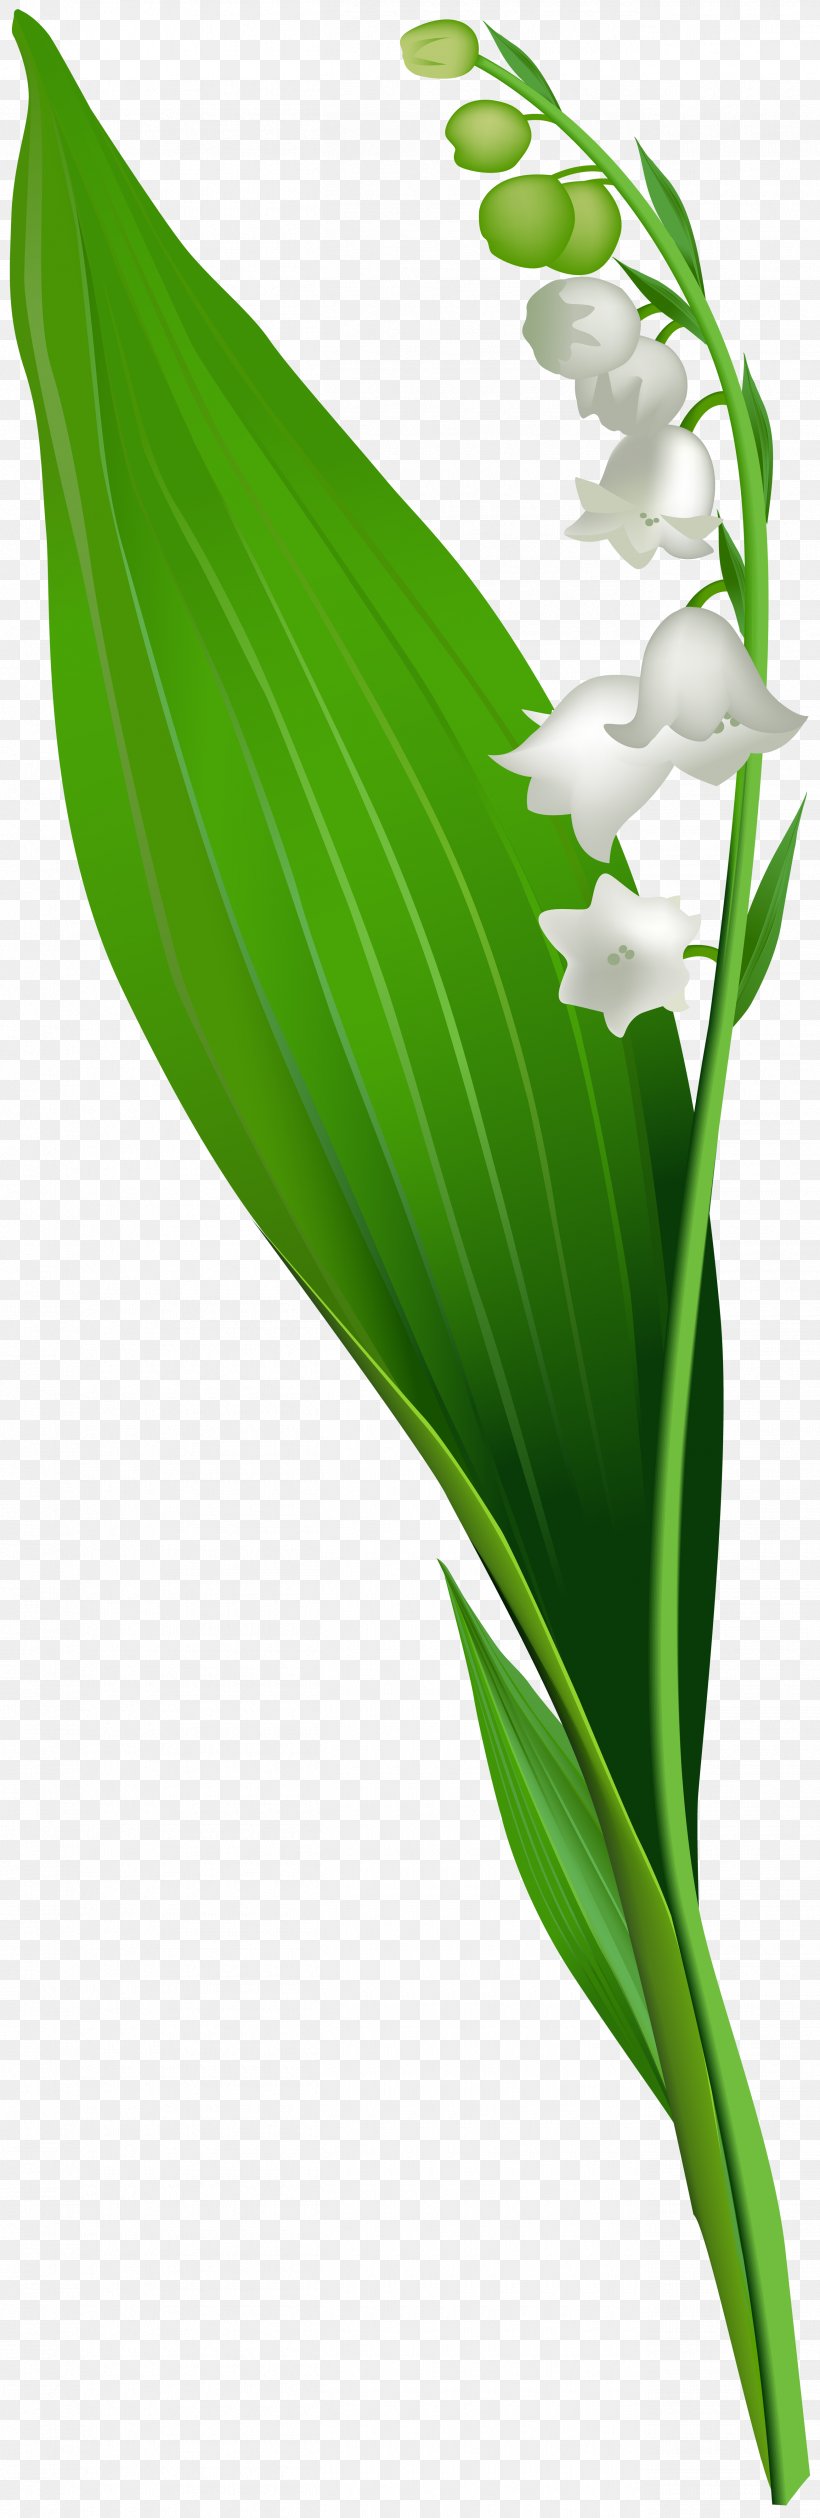 Lily Of The Valley Flower Crocus Vernus Clip Art, PNG, 2605x8000px, Lily Of The Valley, Commodity, Crocus, Crocus Flavus, Crocus Vernus Download Free